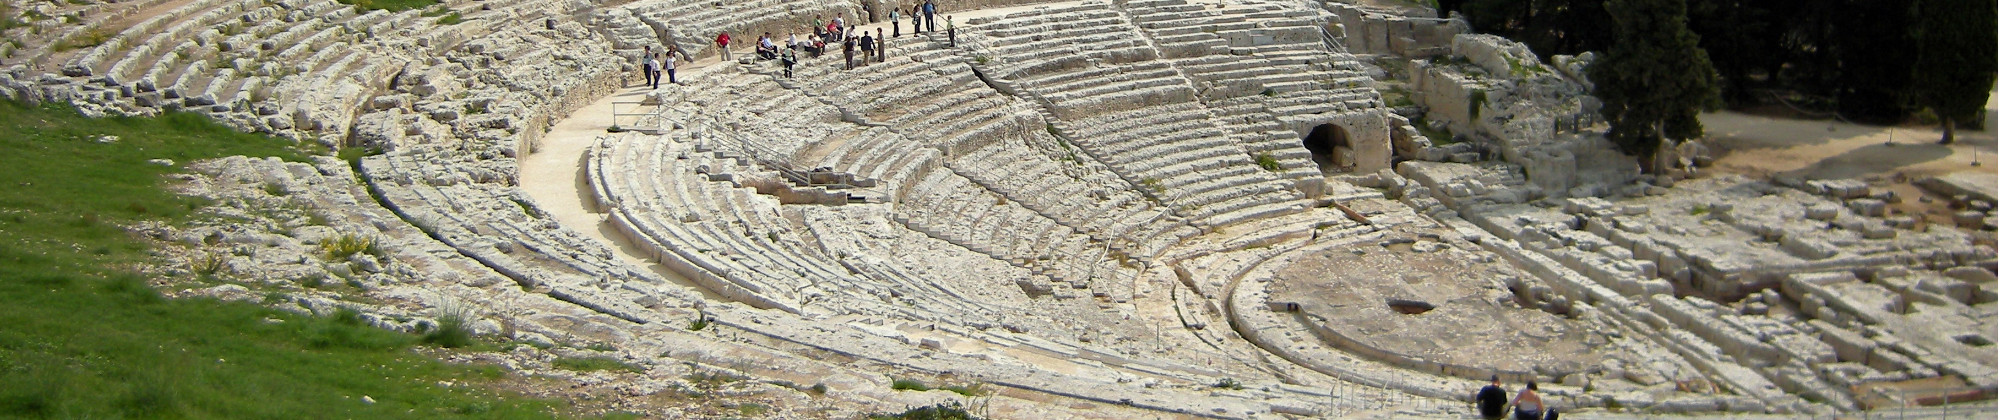 Teatro greco siracusa